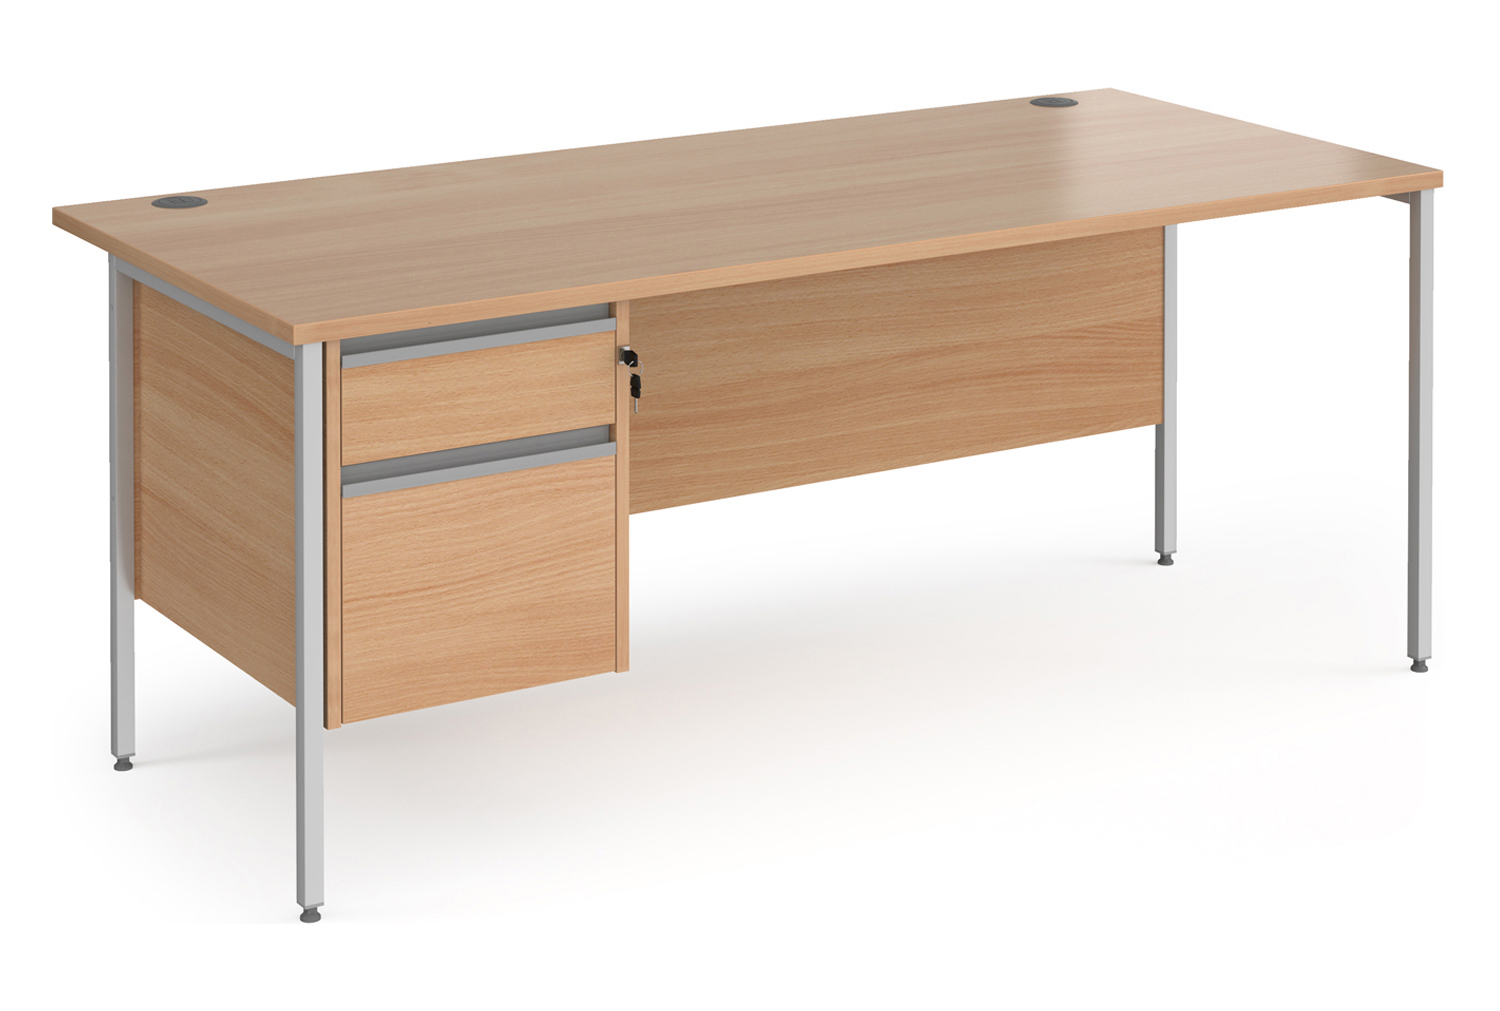 Value Line Classic+ Rectangular H-Leg Office Desk 2 Drawers (Silver Leg), 180wx80dx73h (cm), Beech, Express Delivery